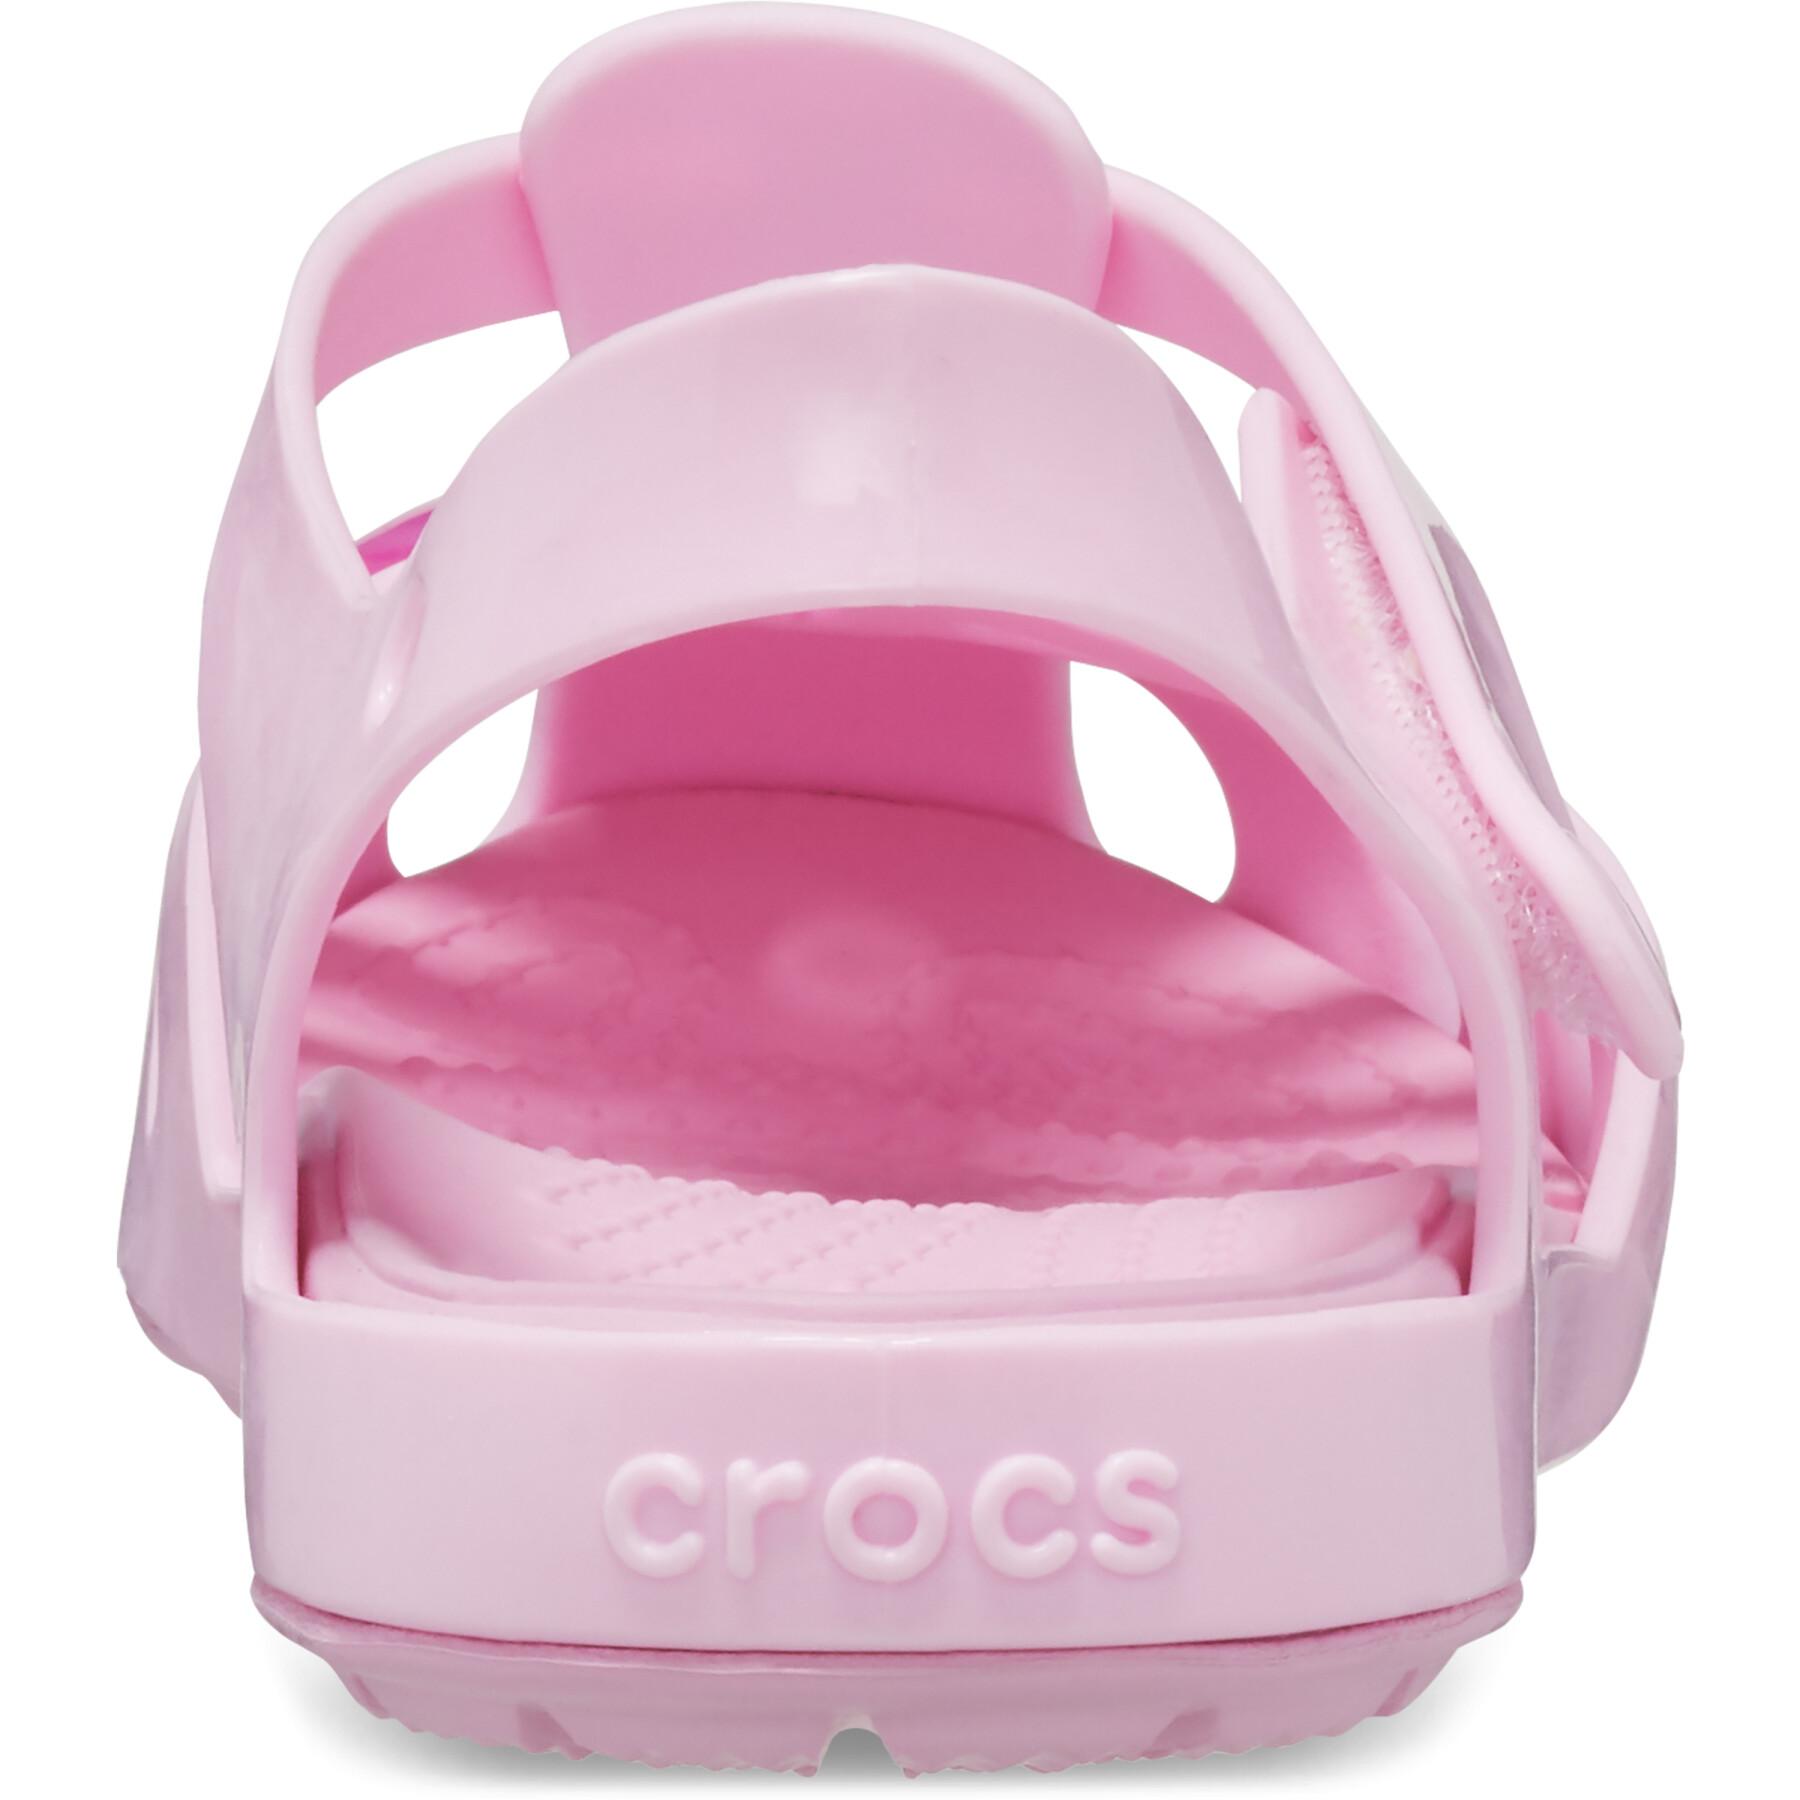 Baby sandals Crocs Isabella Charm T